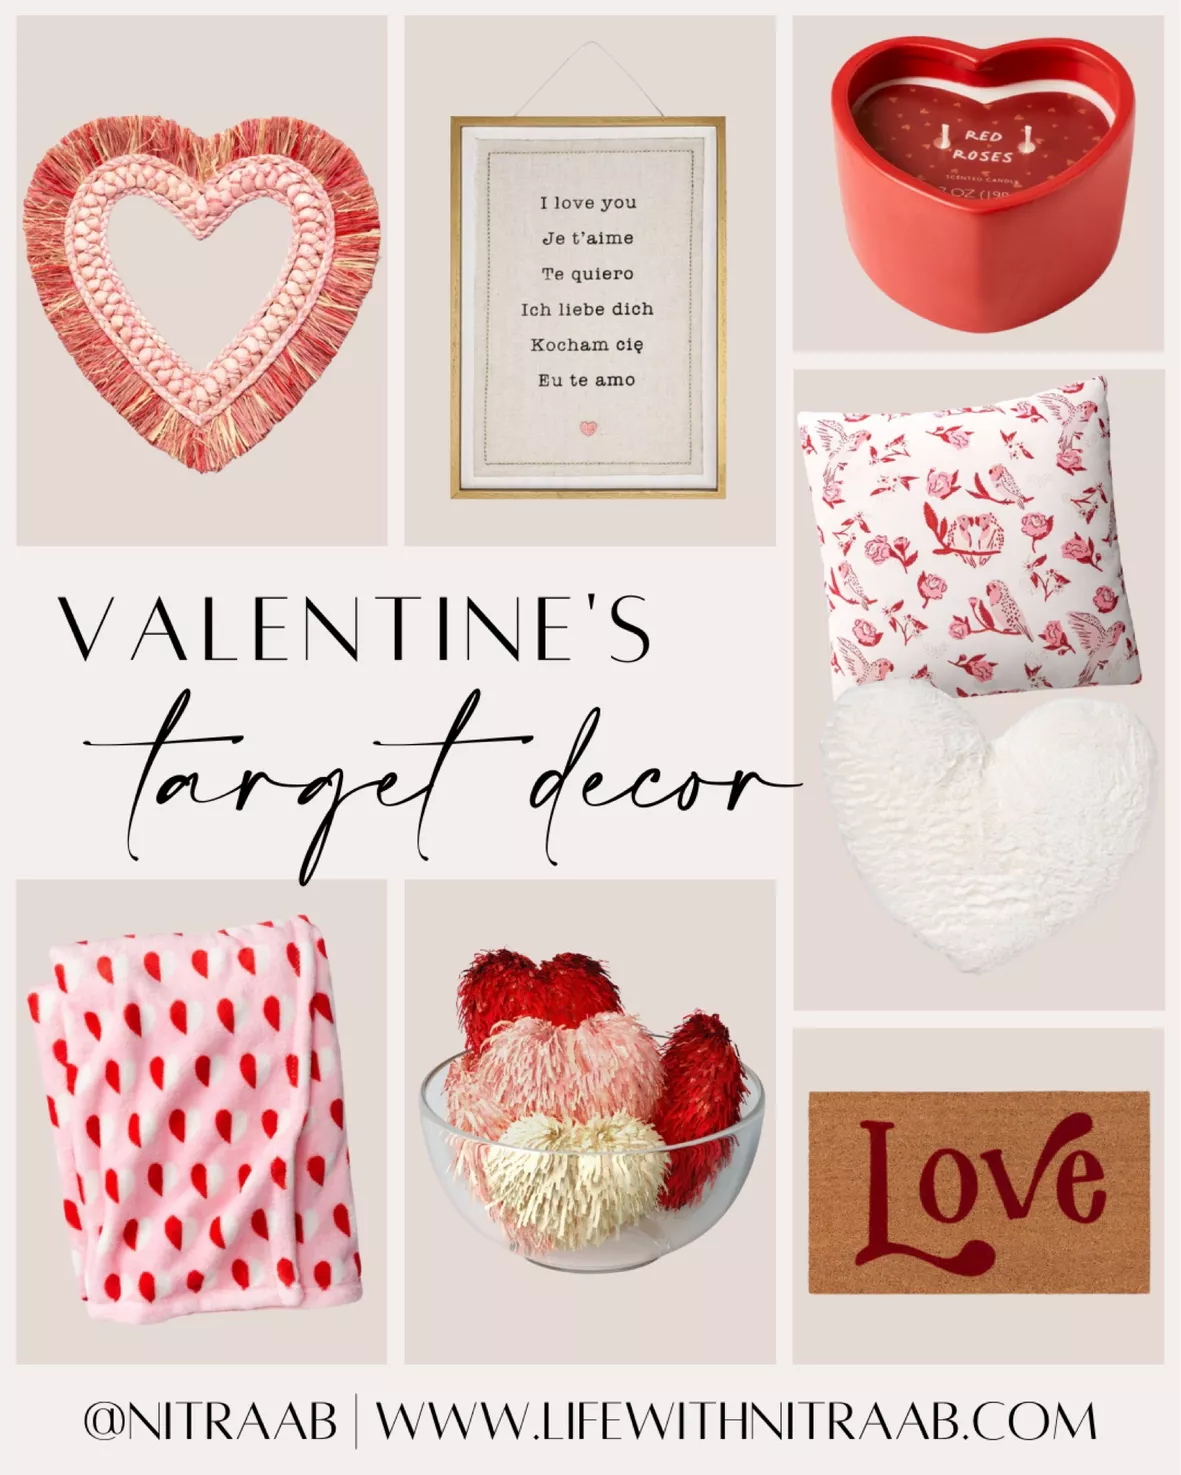 Decorative Filler : Valentine's Day Decorations : Target